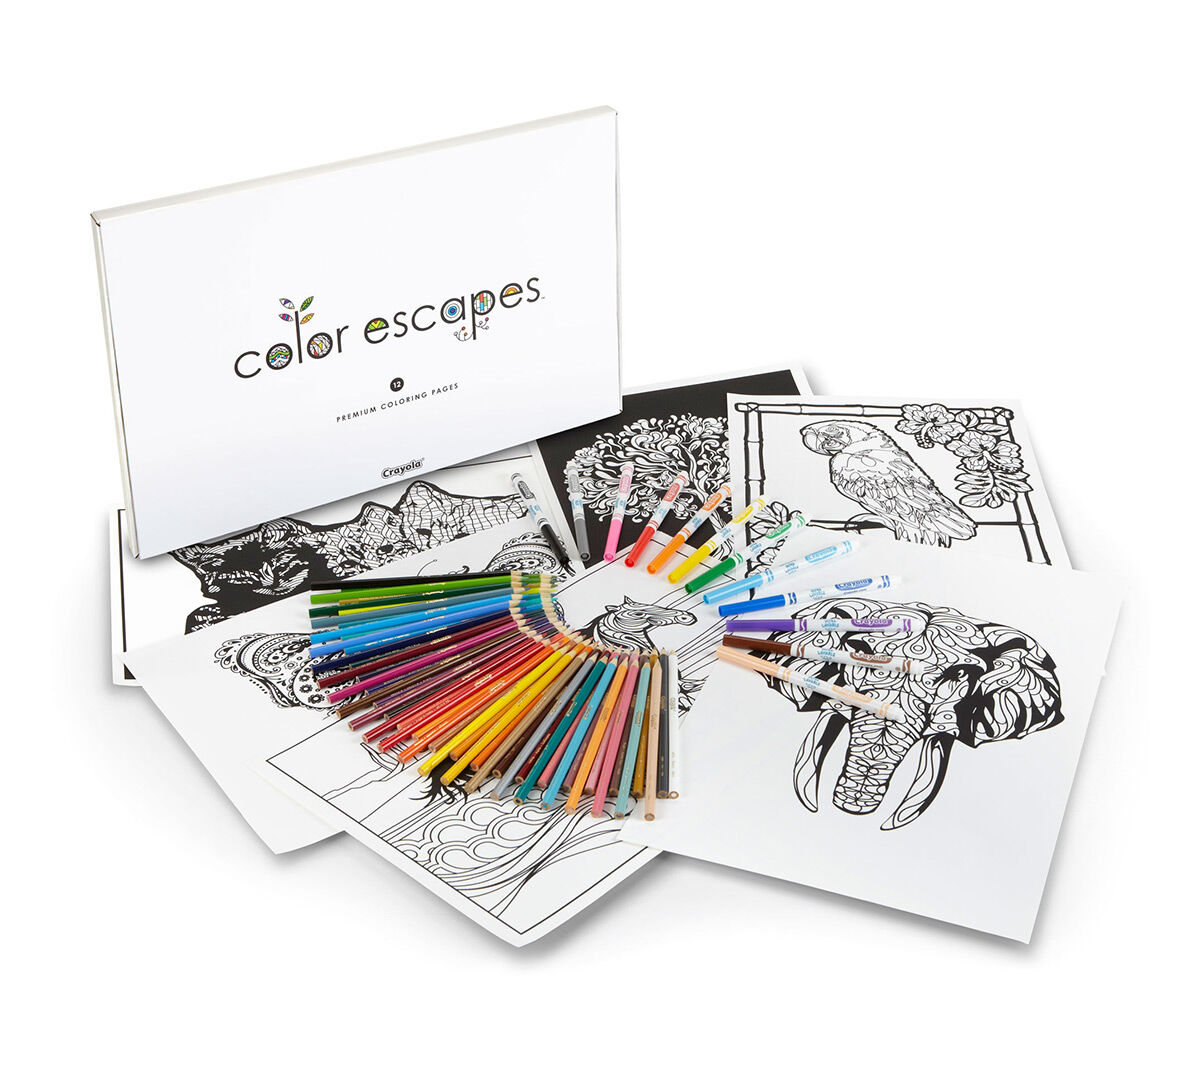 12 Fine Line Markers Art Activity Set 12 Premium Pages Adult Coloring Kaleidoscopes Edition Crayola Color Escapes Coloring Pages & Pencil Kit 50 Colored Pencils 